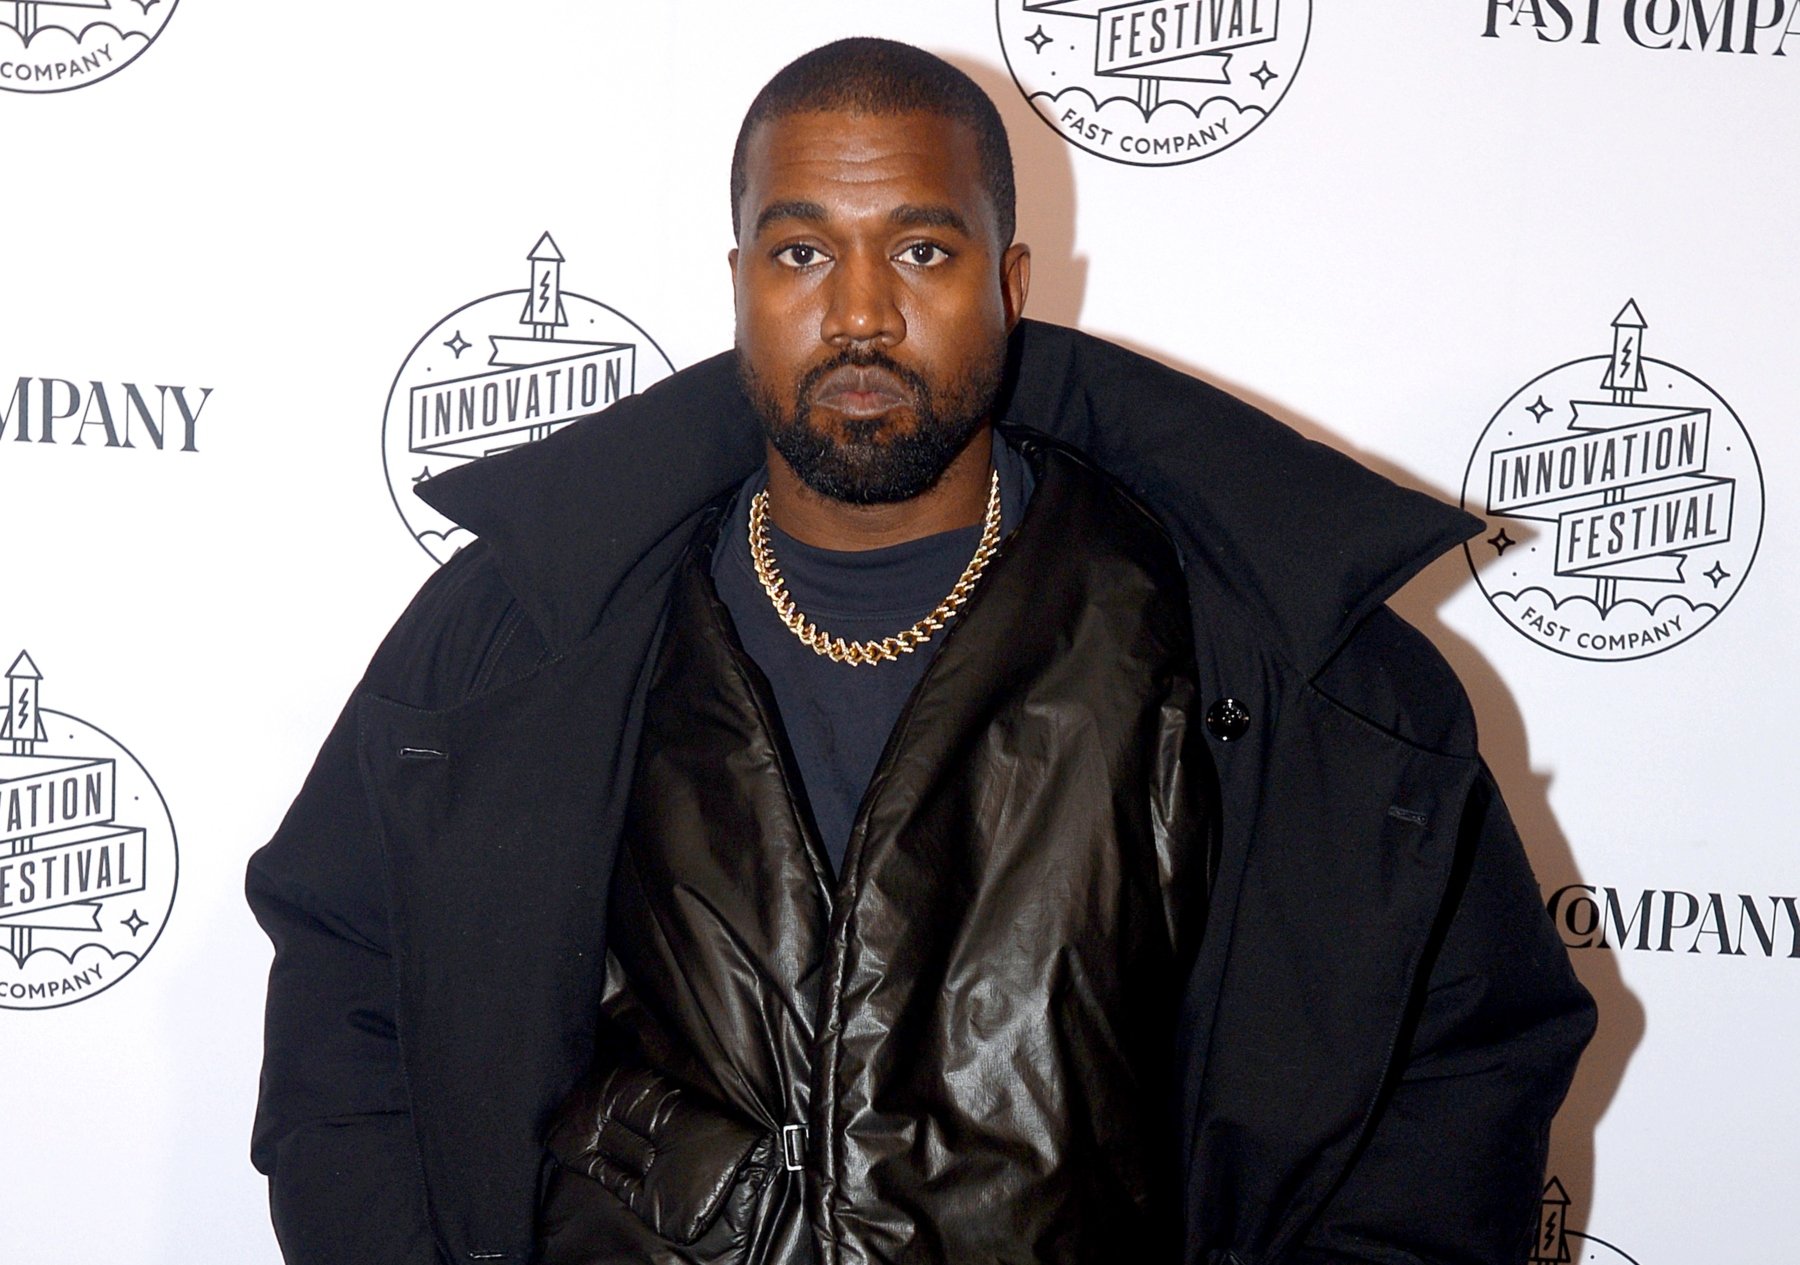 Kanye West, aka Ye, attends the Fast Company Innovation Festival, 2019